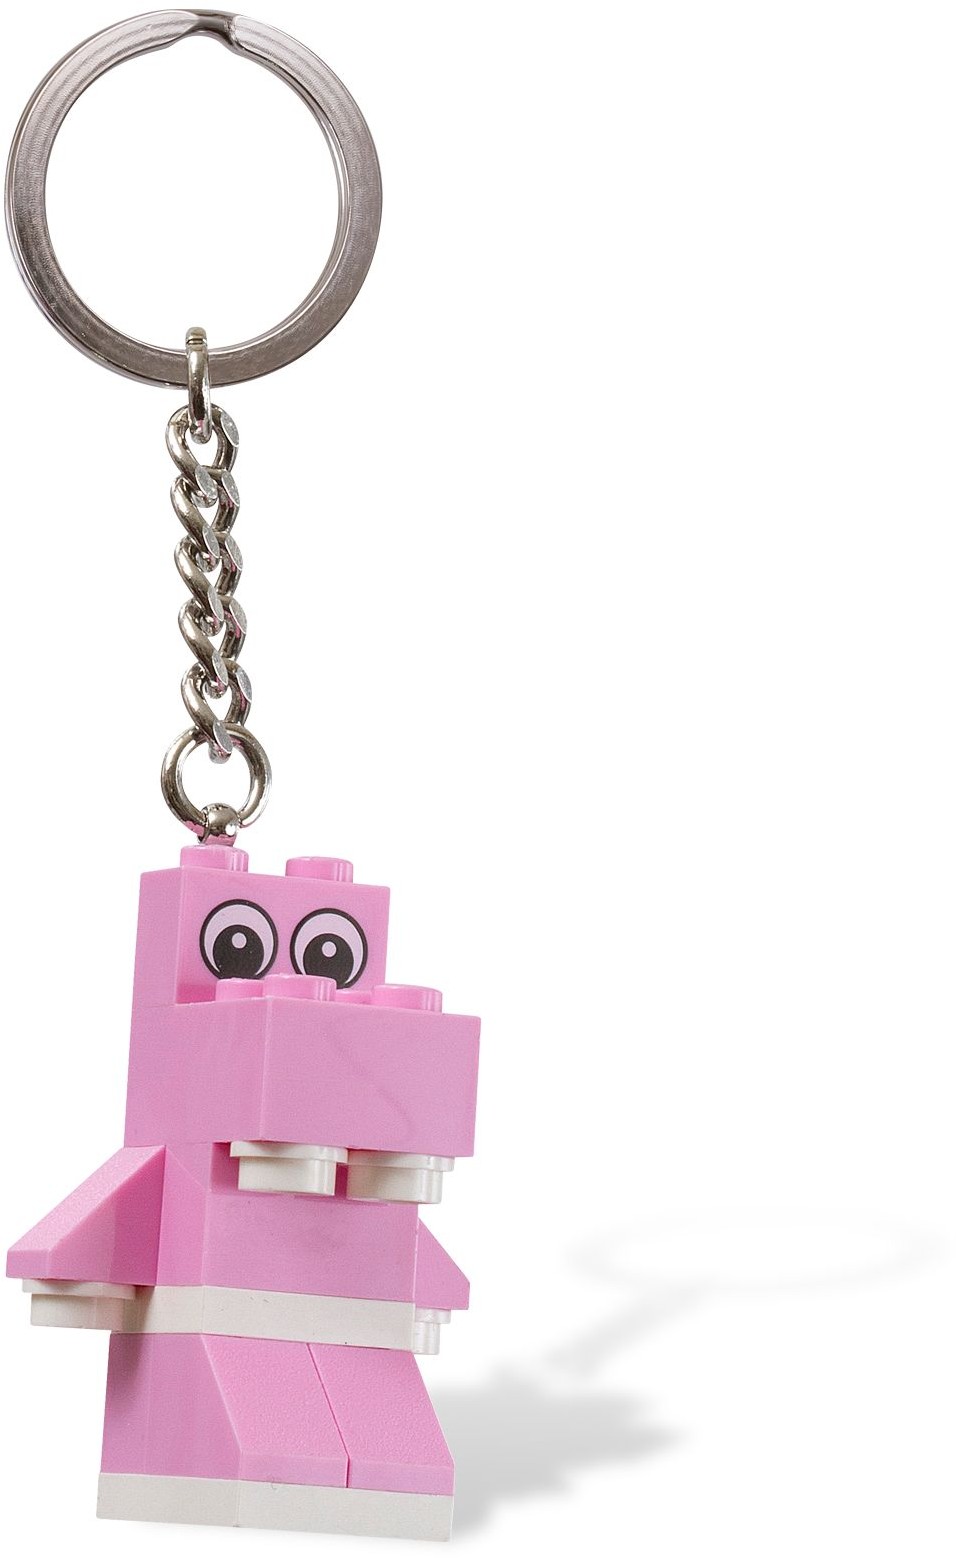 Lego Key Chain Monkey # 850417 New